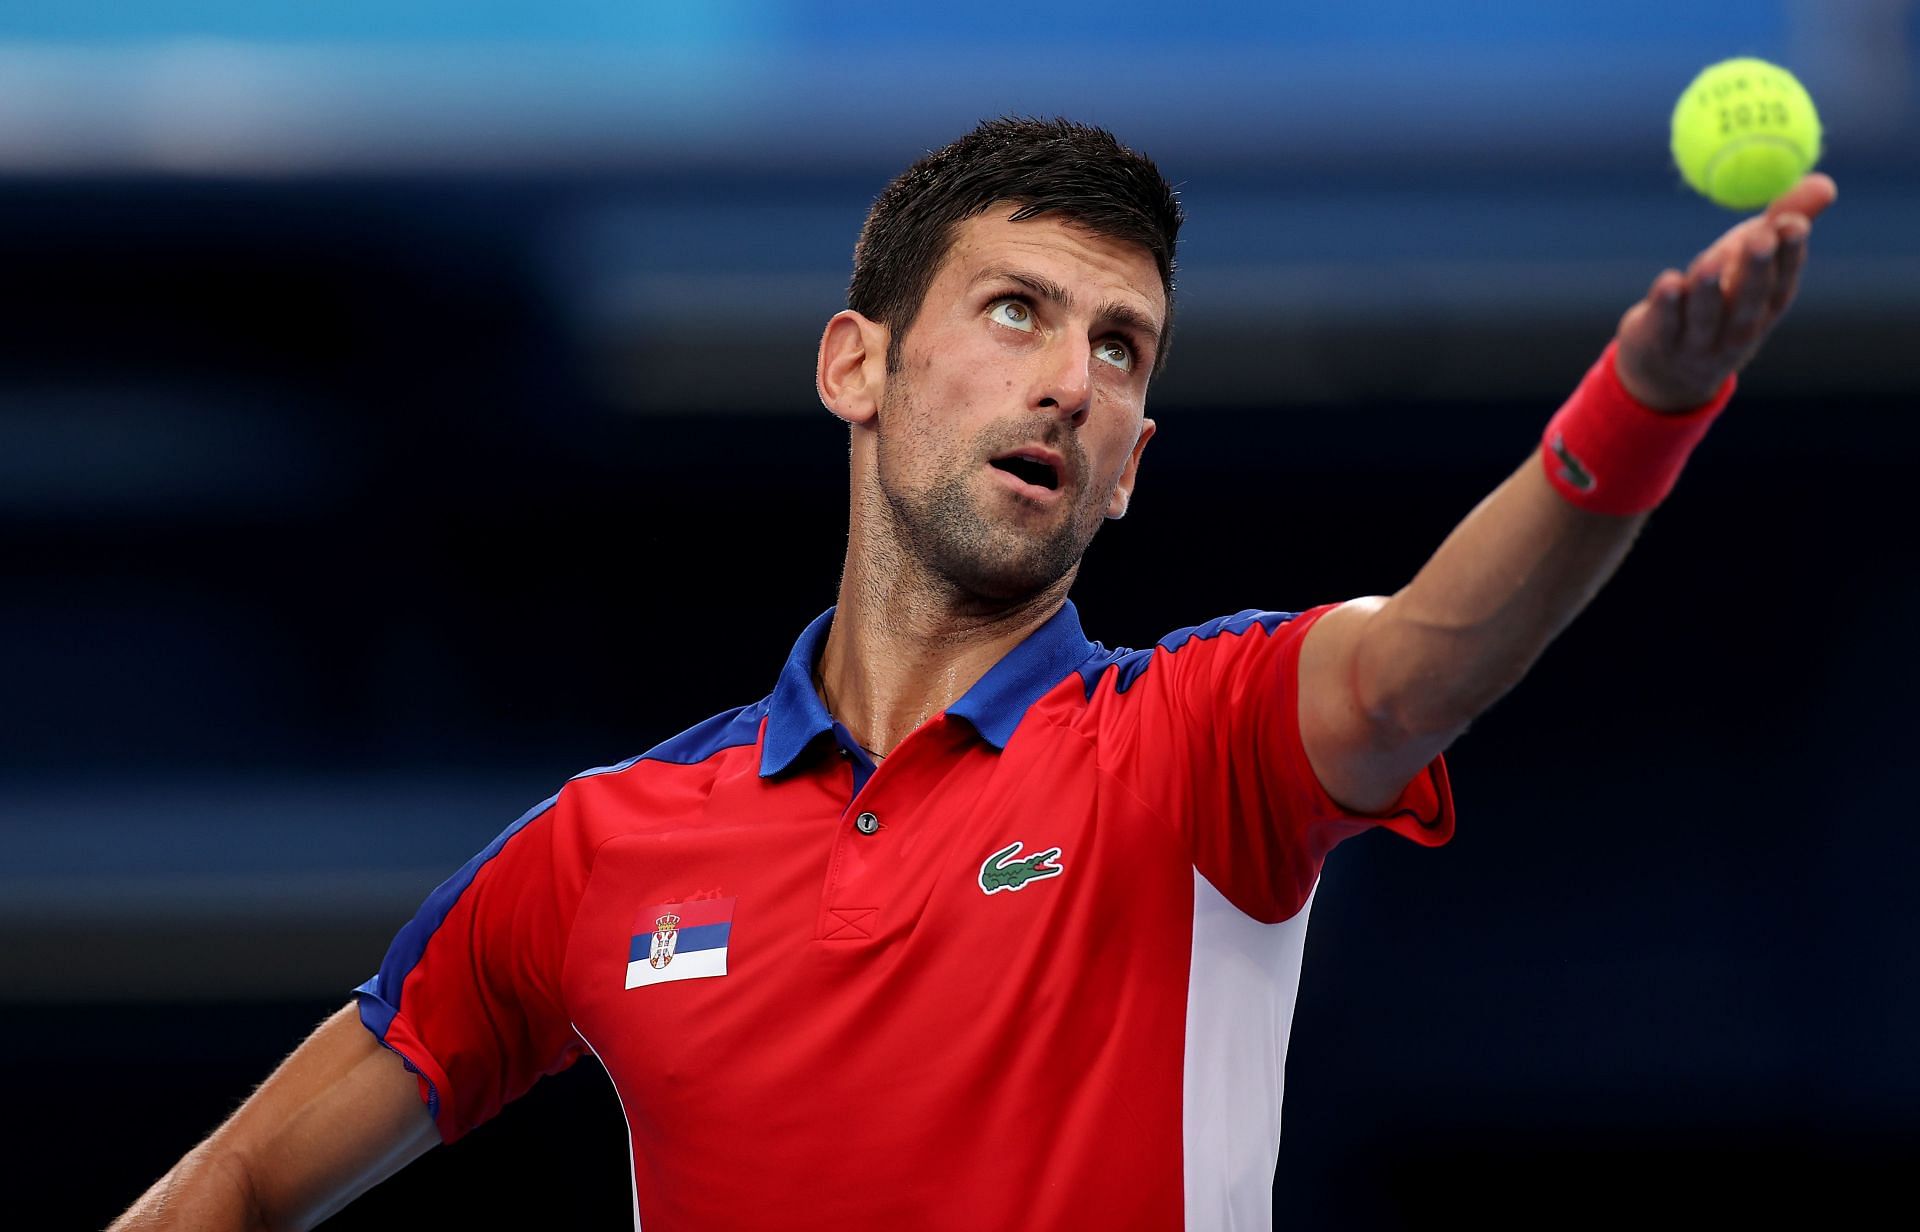 Novak Djokovic serving at the Tokyo Olympics in 2021